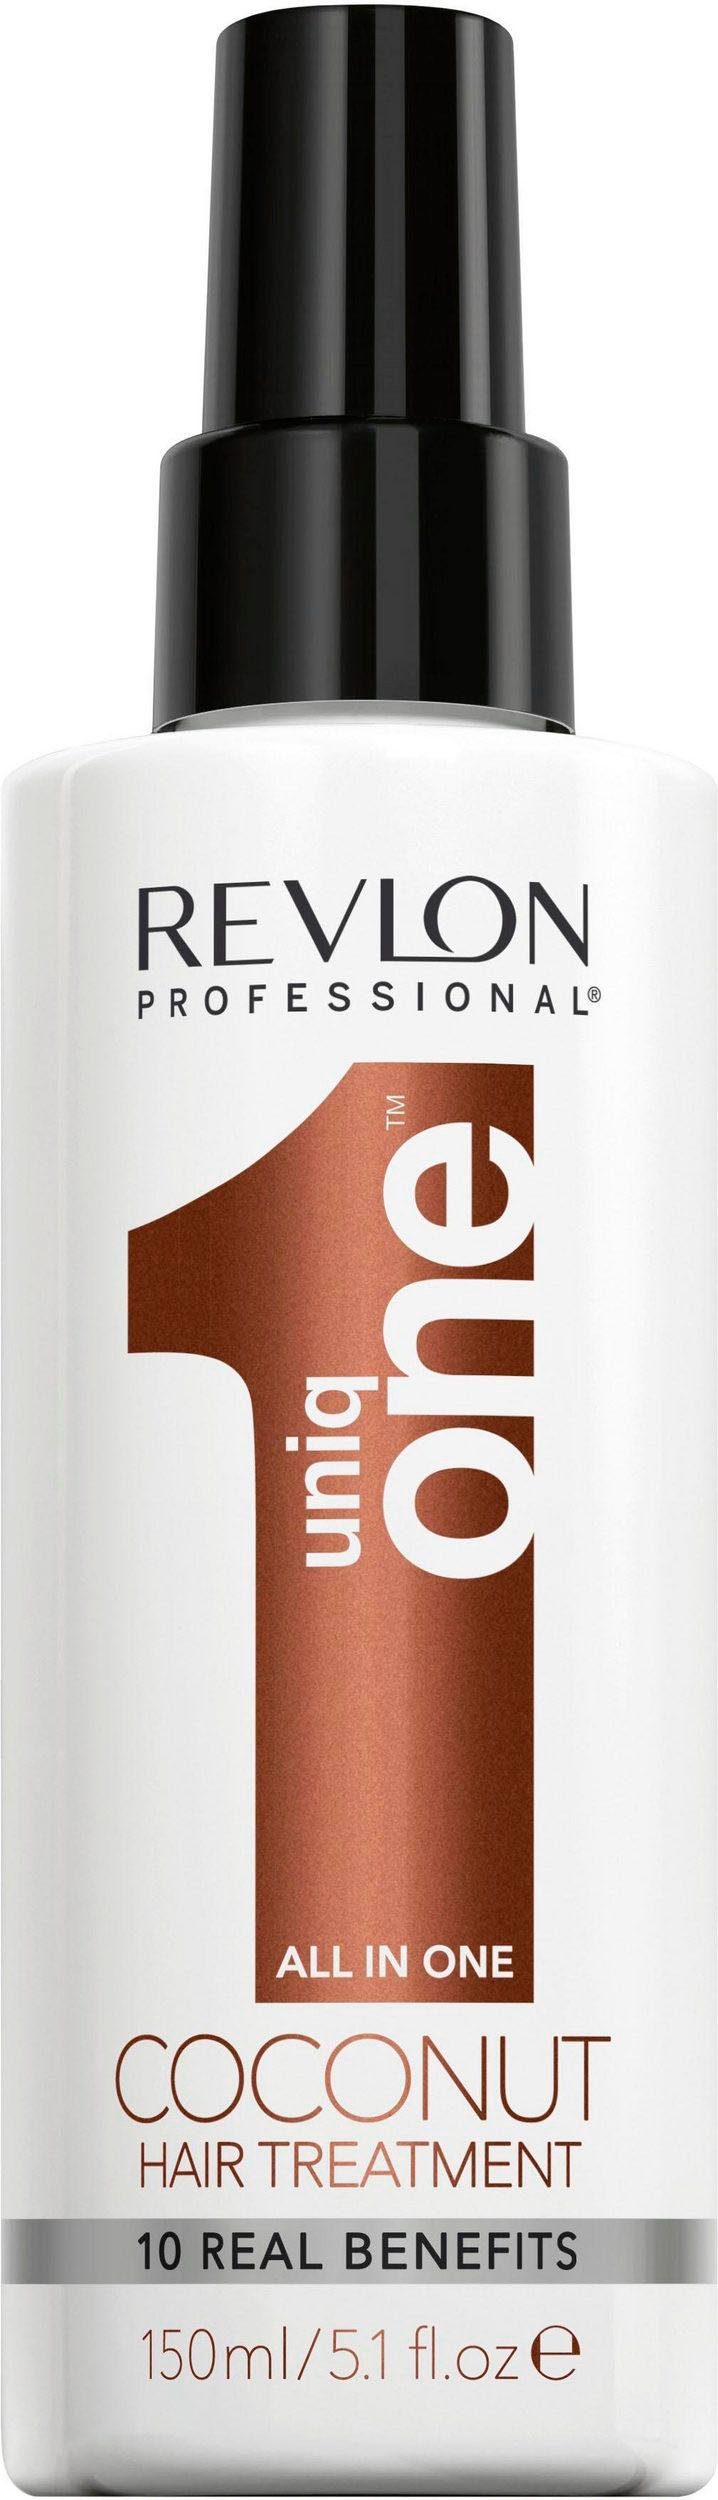 Damen Haarpflege REVLON PROFESSIONAL Leave-in Pflege Uniq One All in One Coconut Hair Treatment, repariert volumengebend